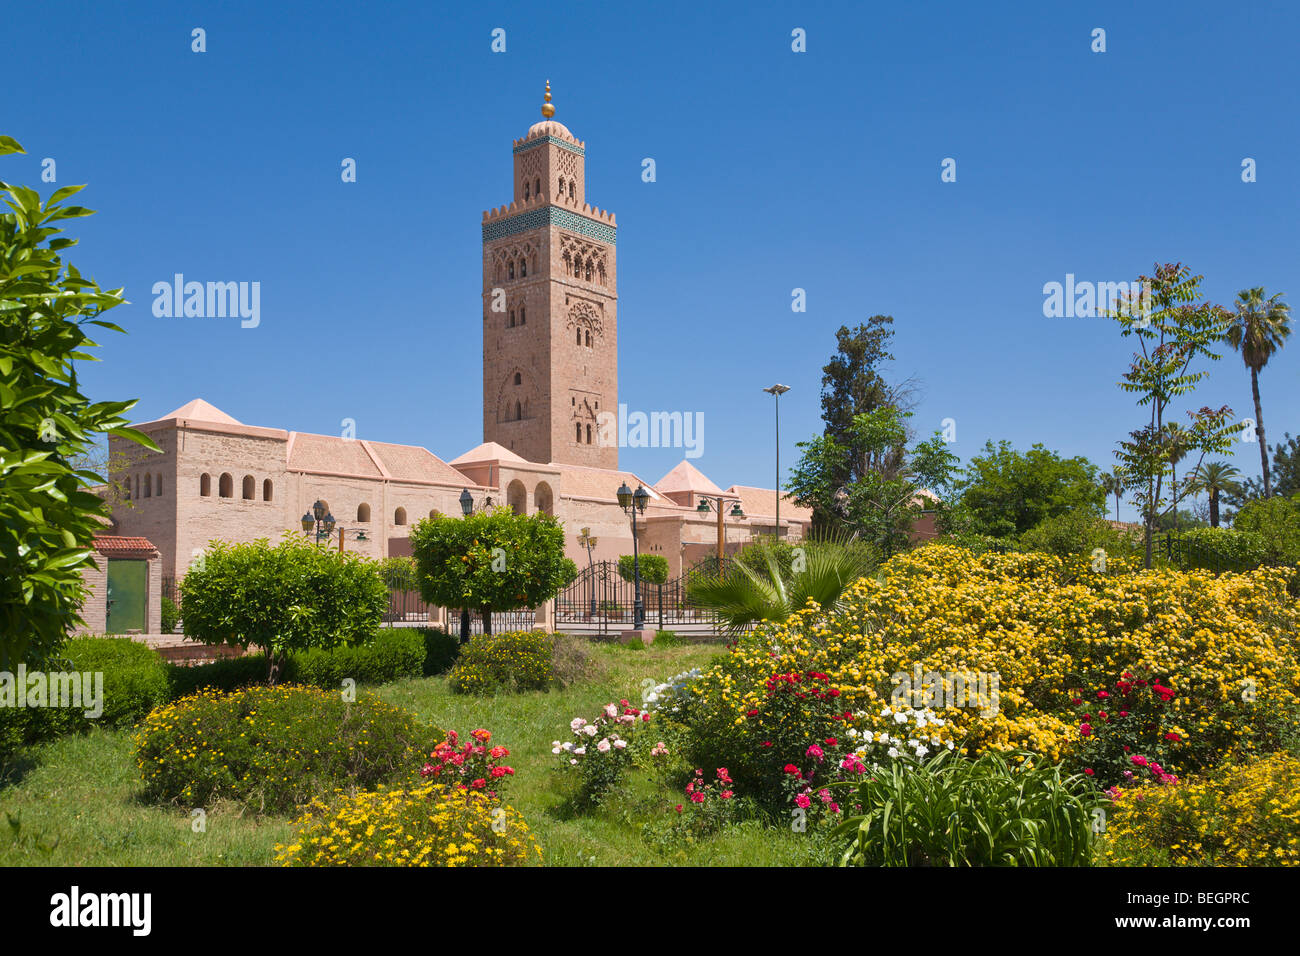 Moschea e minareto di Koutoubia Marrakech marocco Foto Stock